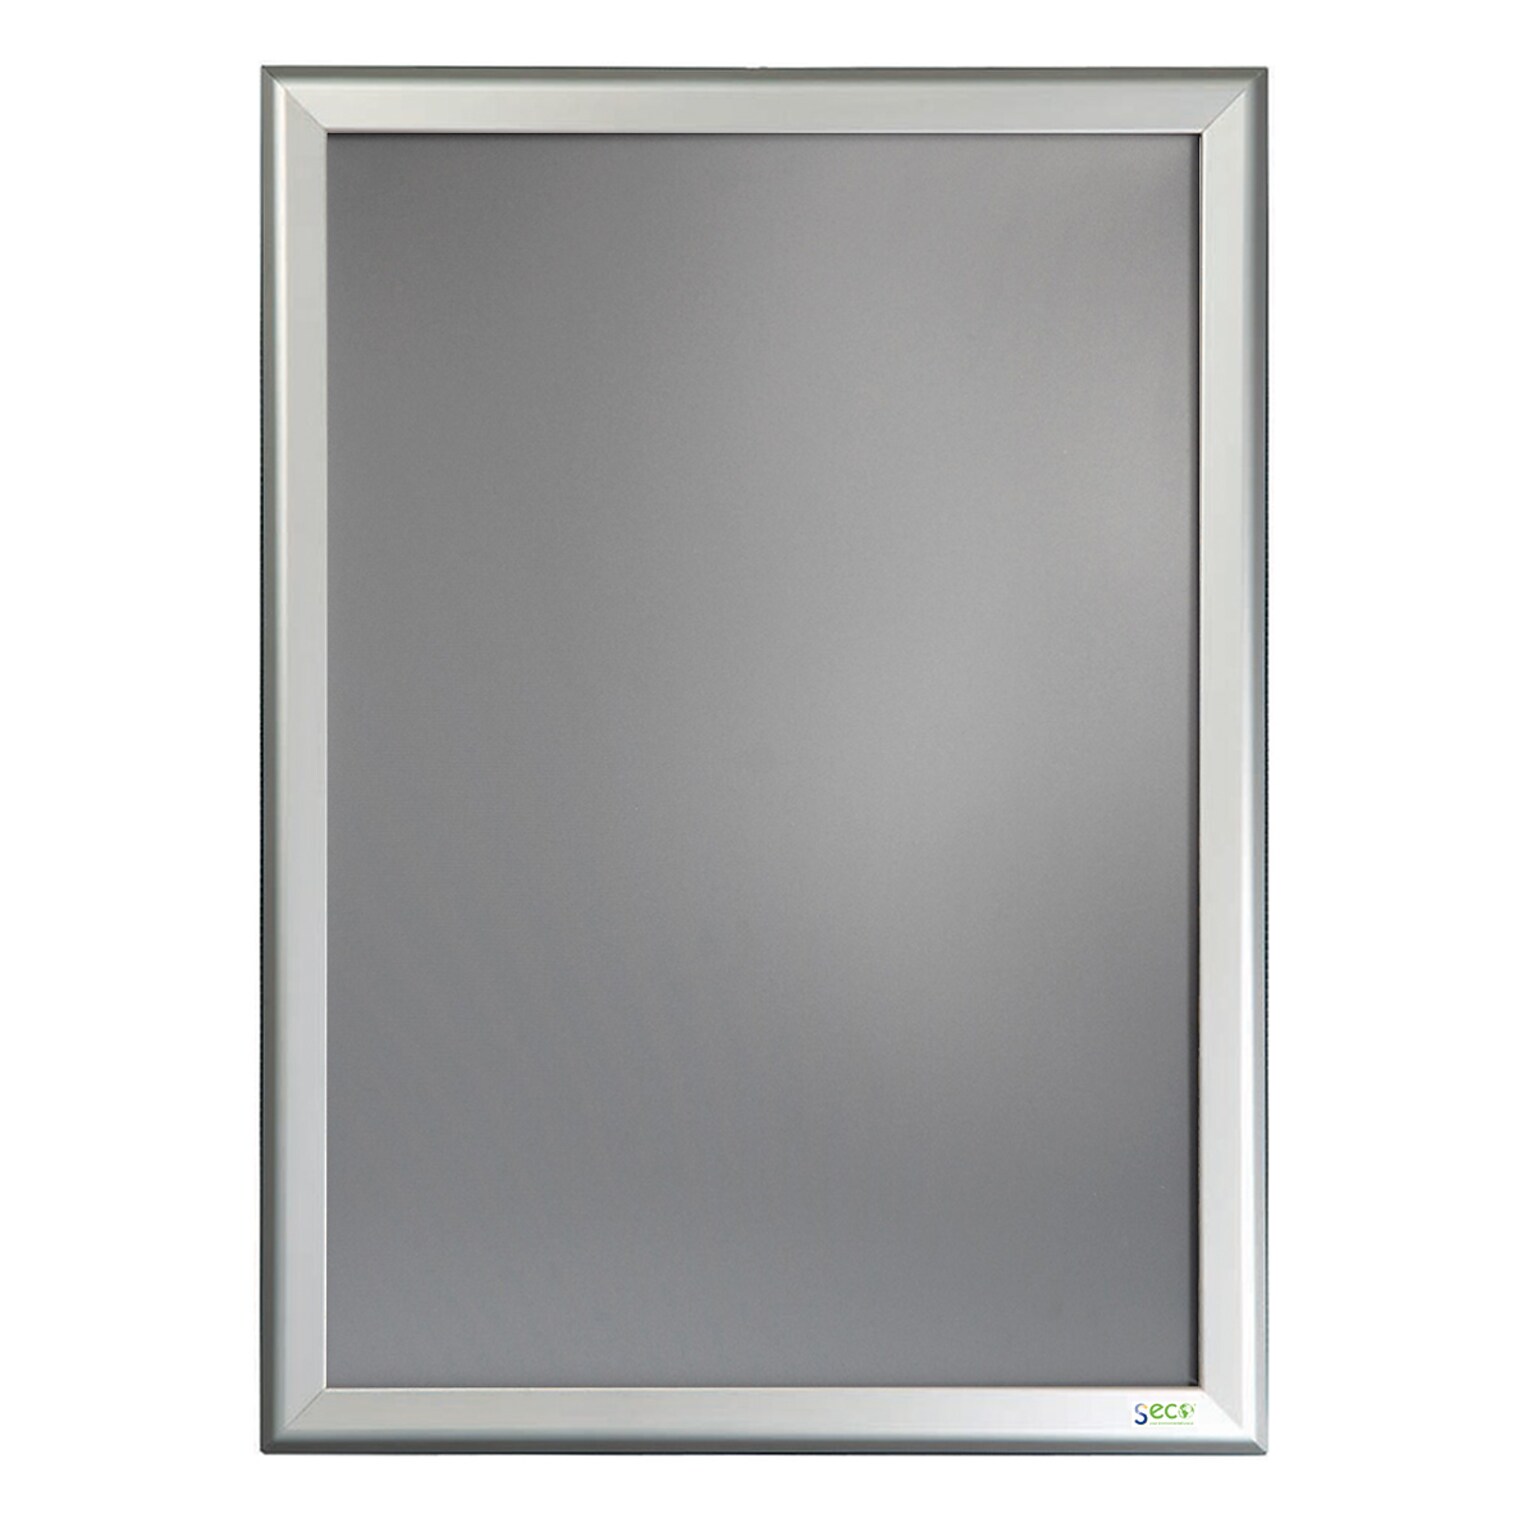 Seco Snapframe Polyvinyl Chloride Poster Board, 36 x 48, Silver (32SN3648-SV)